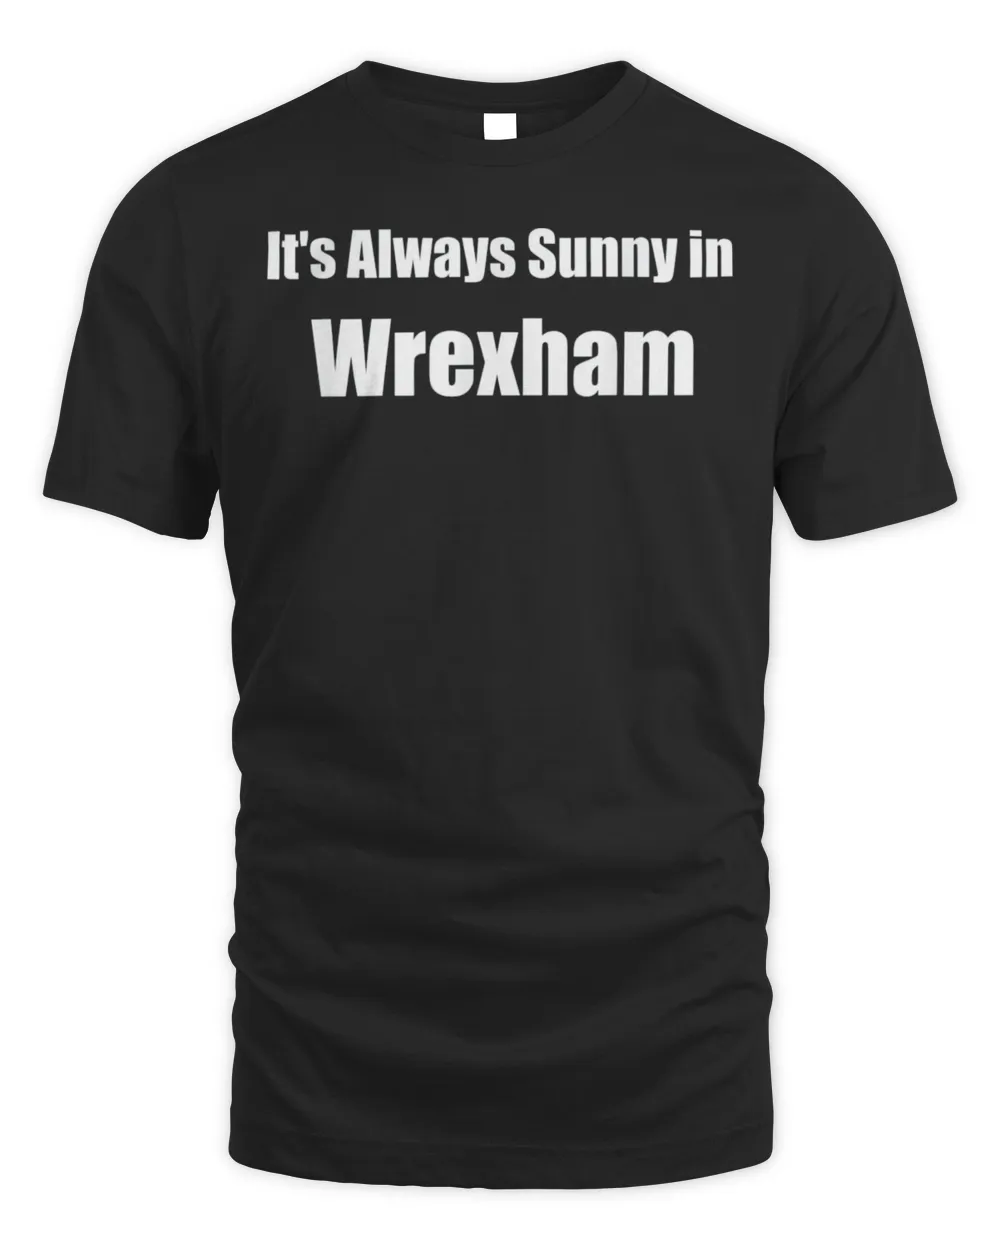 It’s Always Sunny in Wrexham Shirt